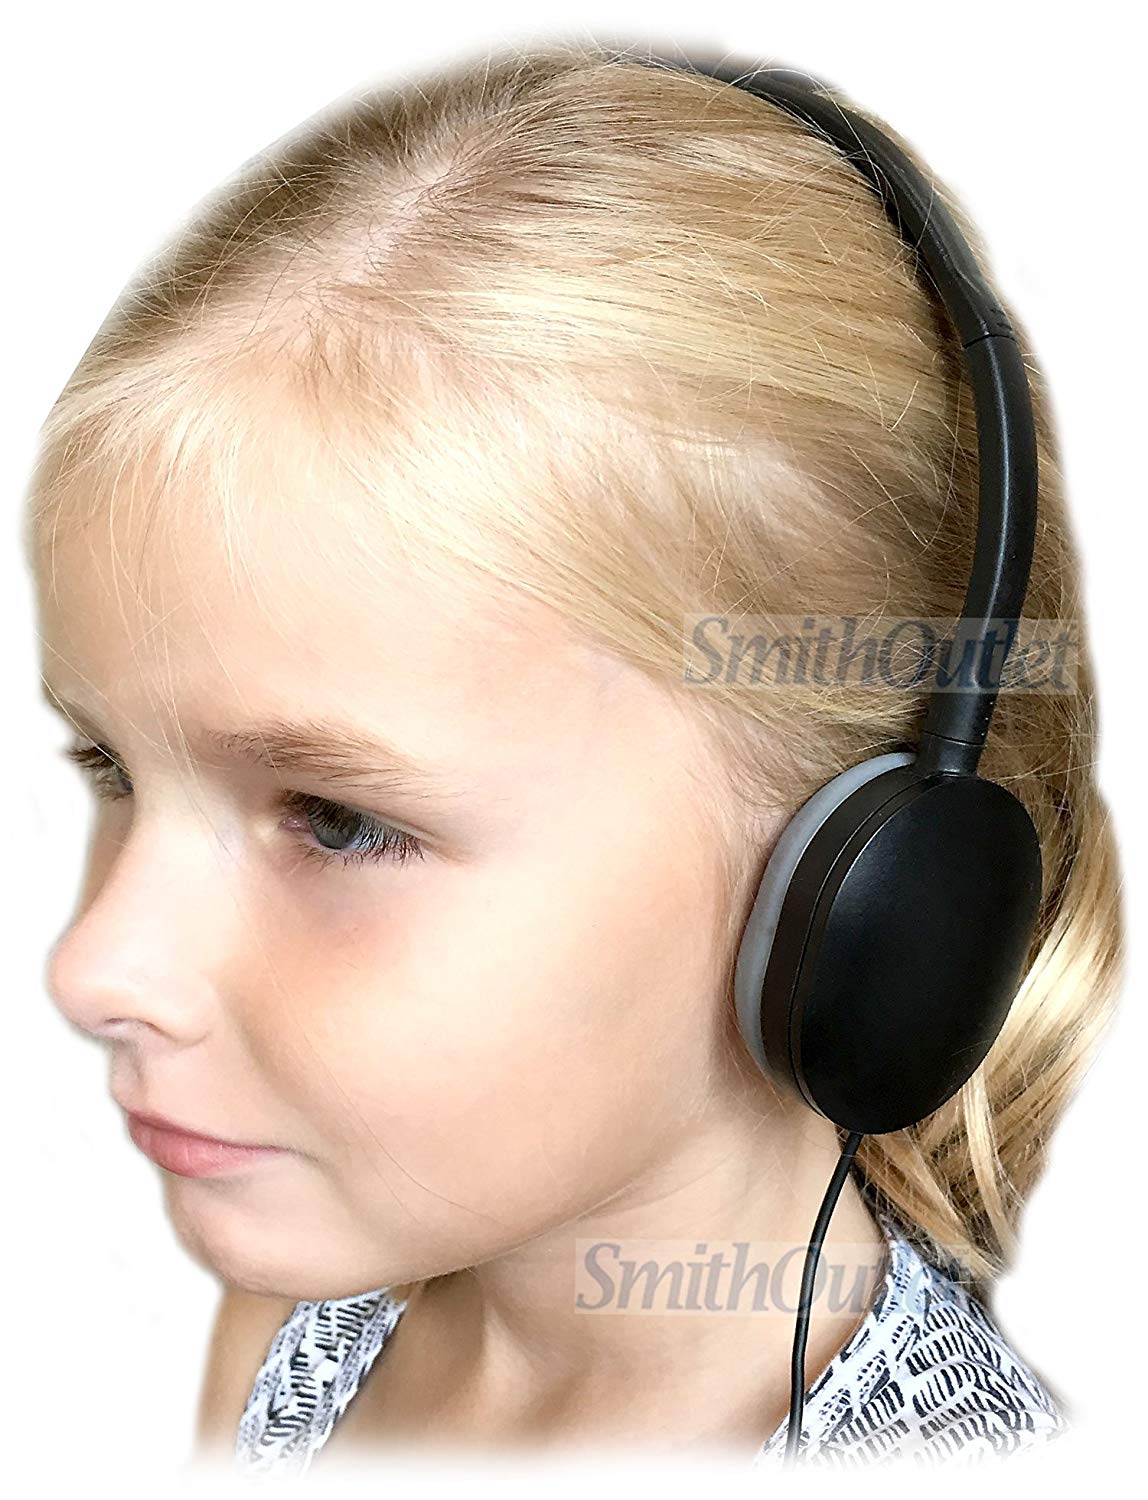 Student Using SmithOutlet Rubber Earpad Headphones